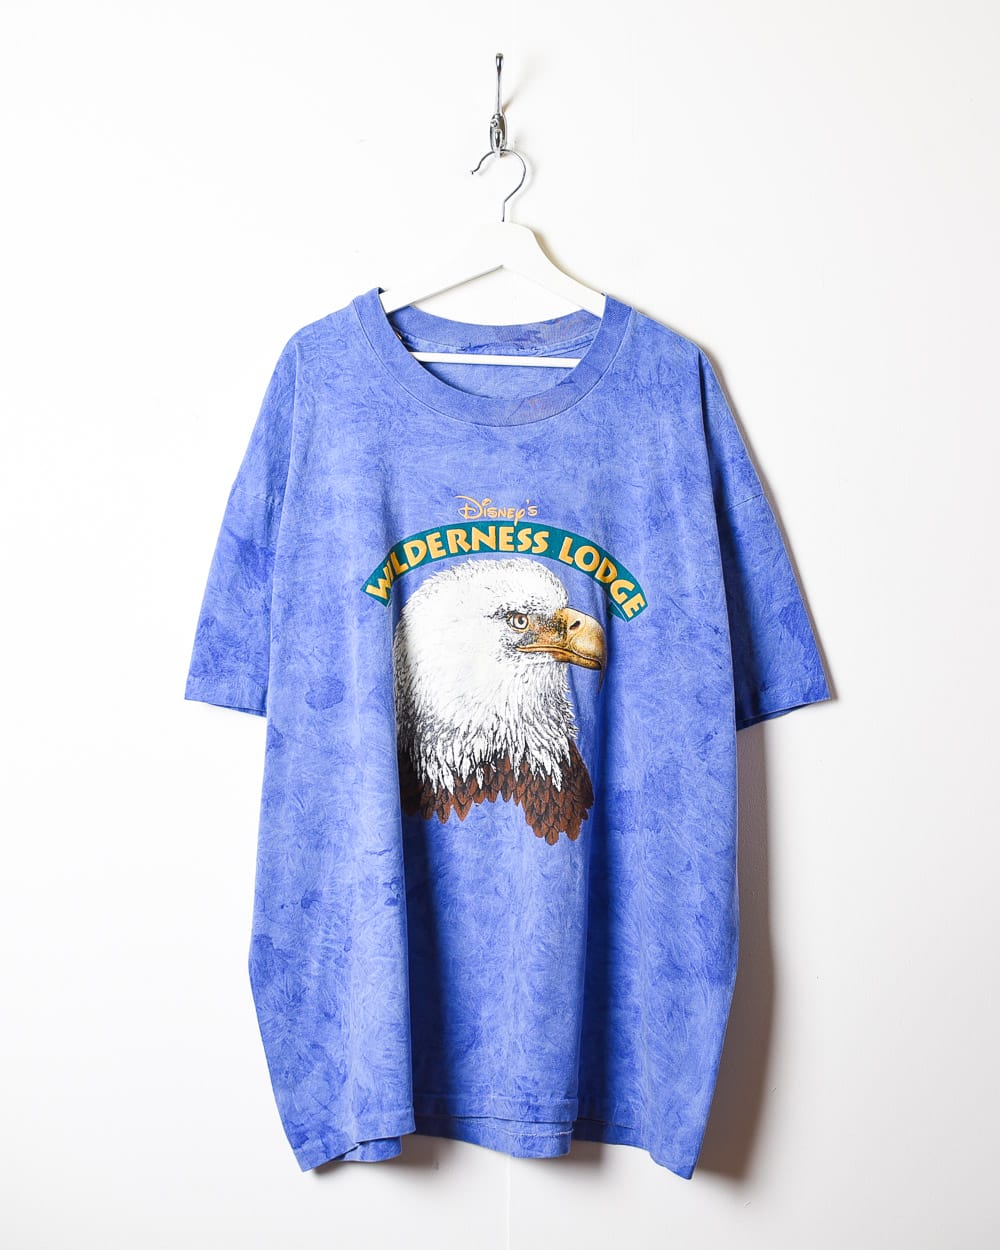 Blue Disney's Wilderness Lodge Eagle Dyed Single Stitch T-Shirt - XX-Large